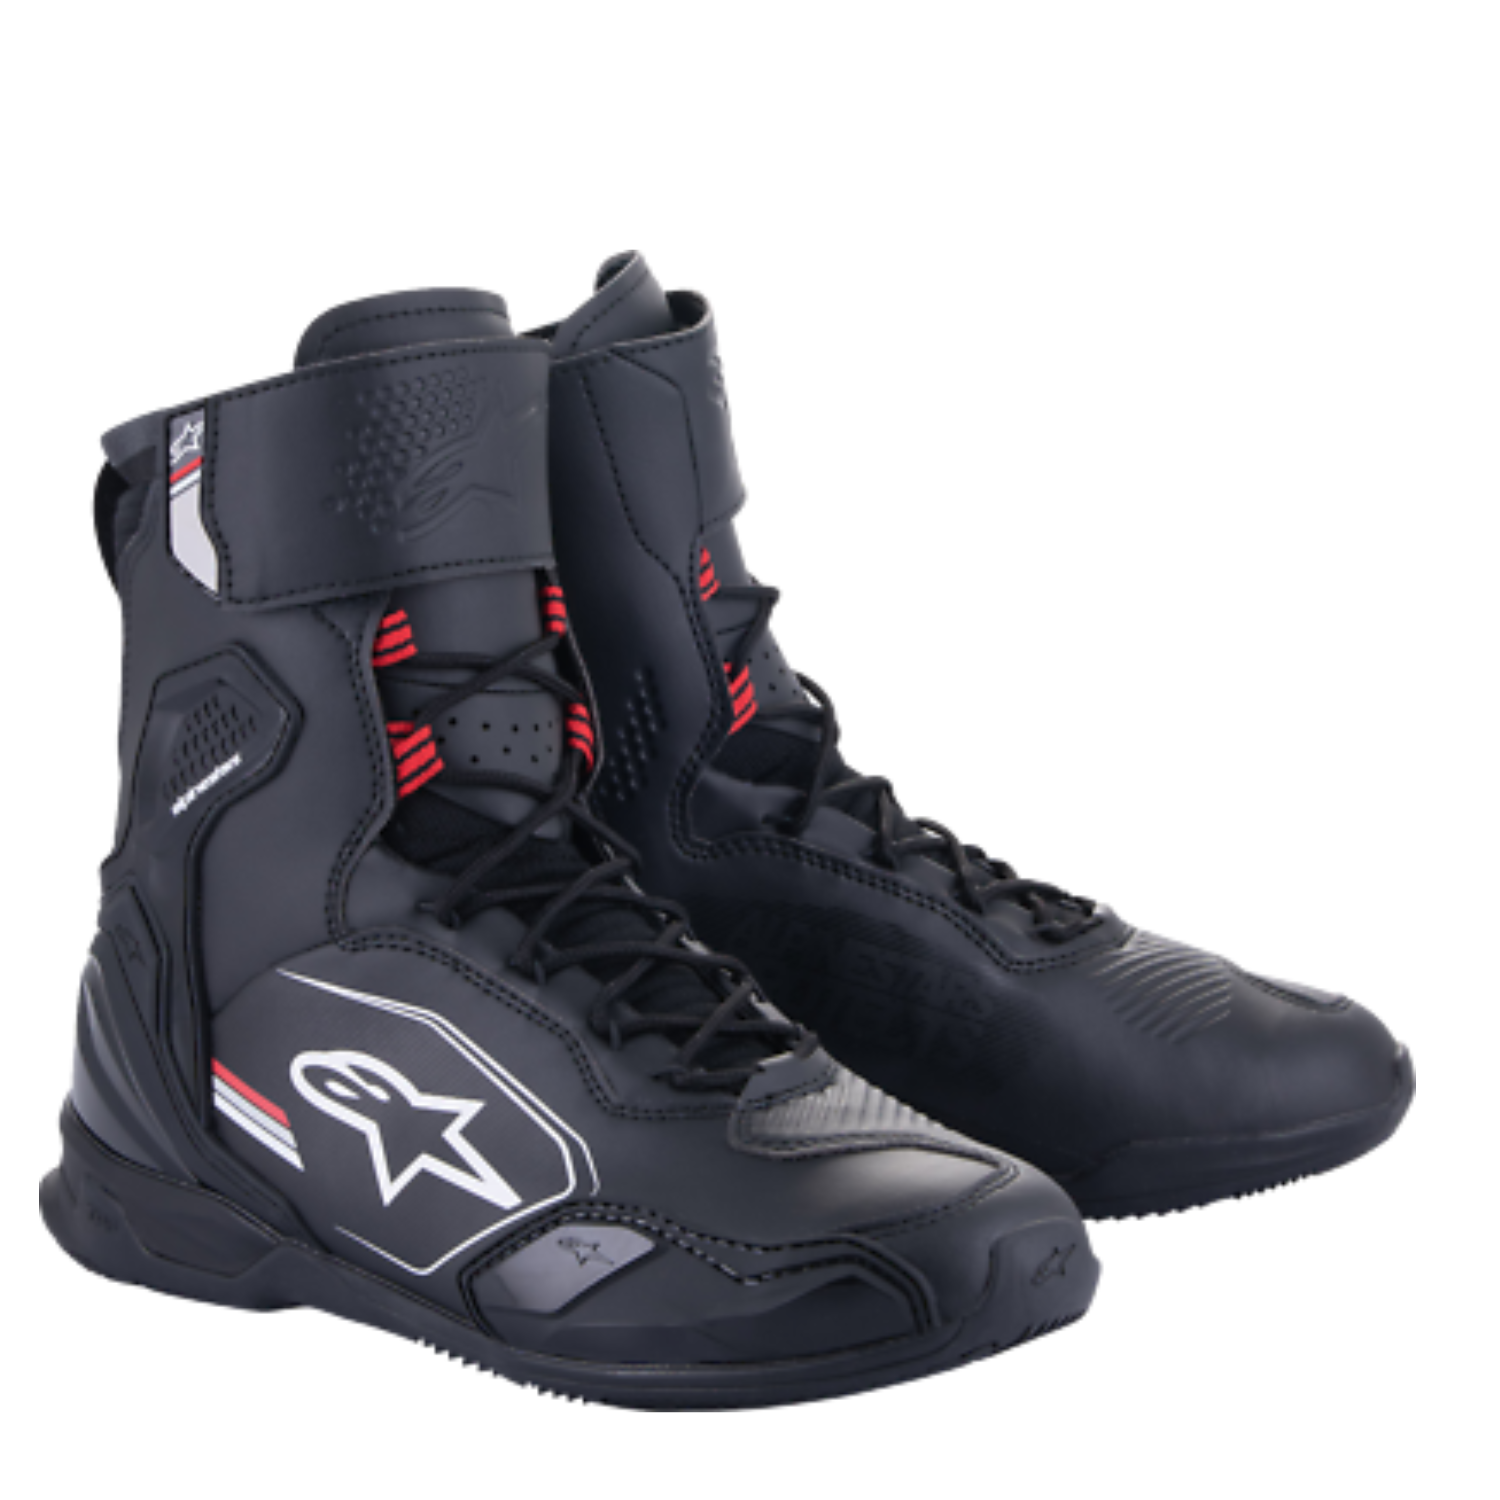 Image of Alpinestars Superfaster Shoes Black Gray Bright Red Größe US 12